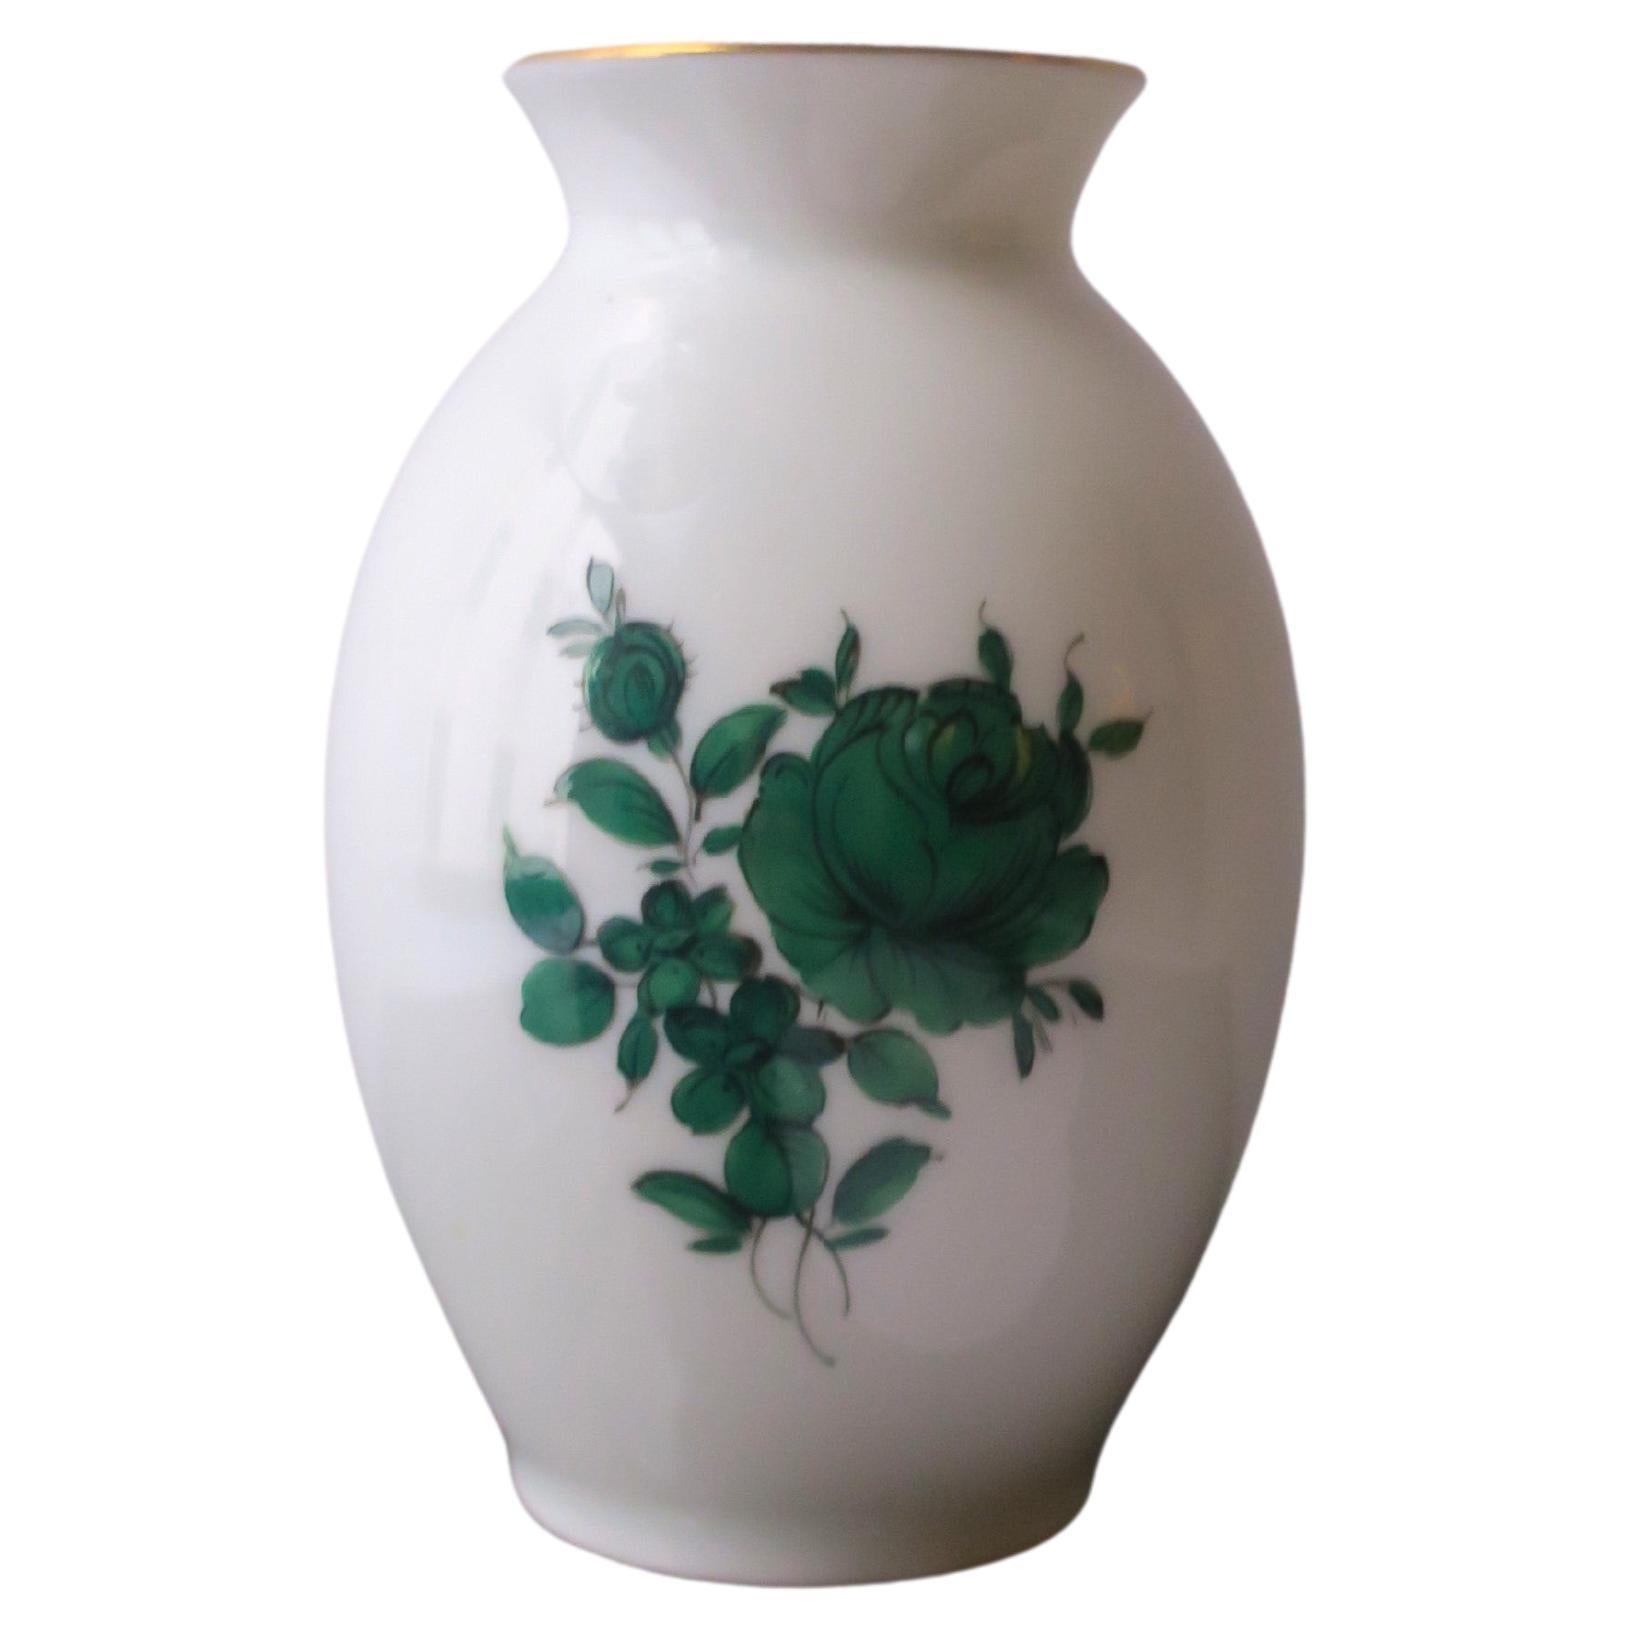 Austrian Porcelain Vase with Roses